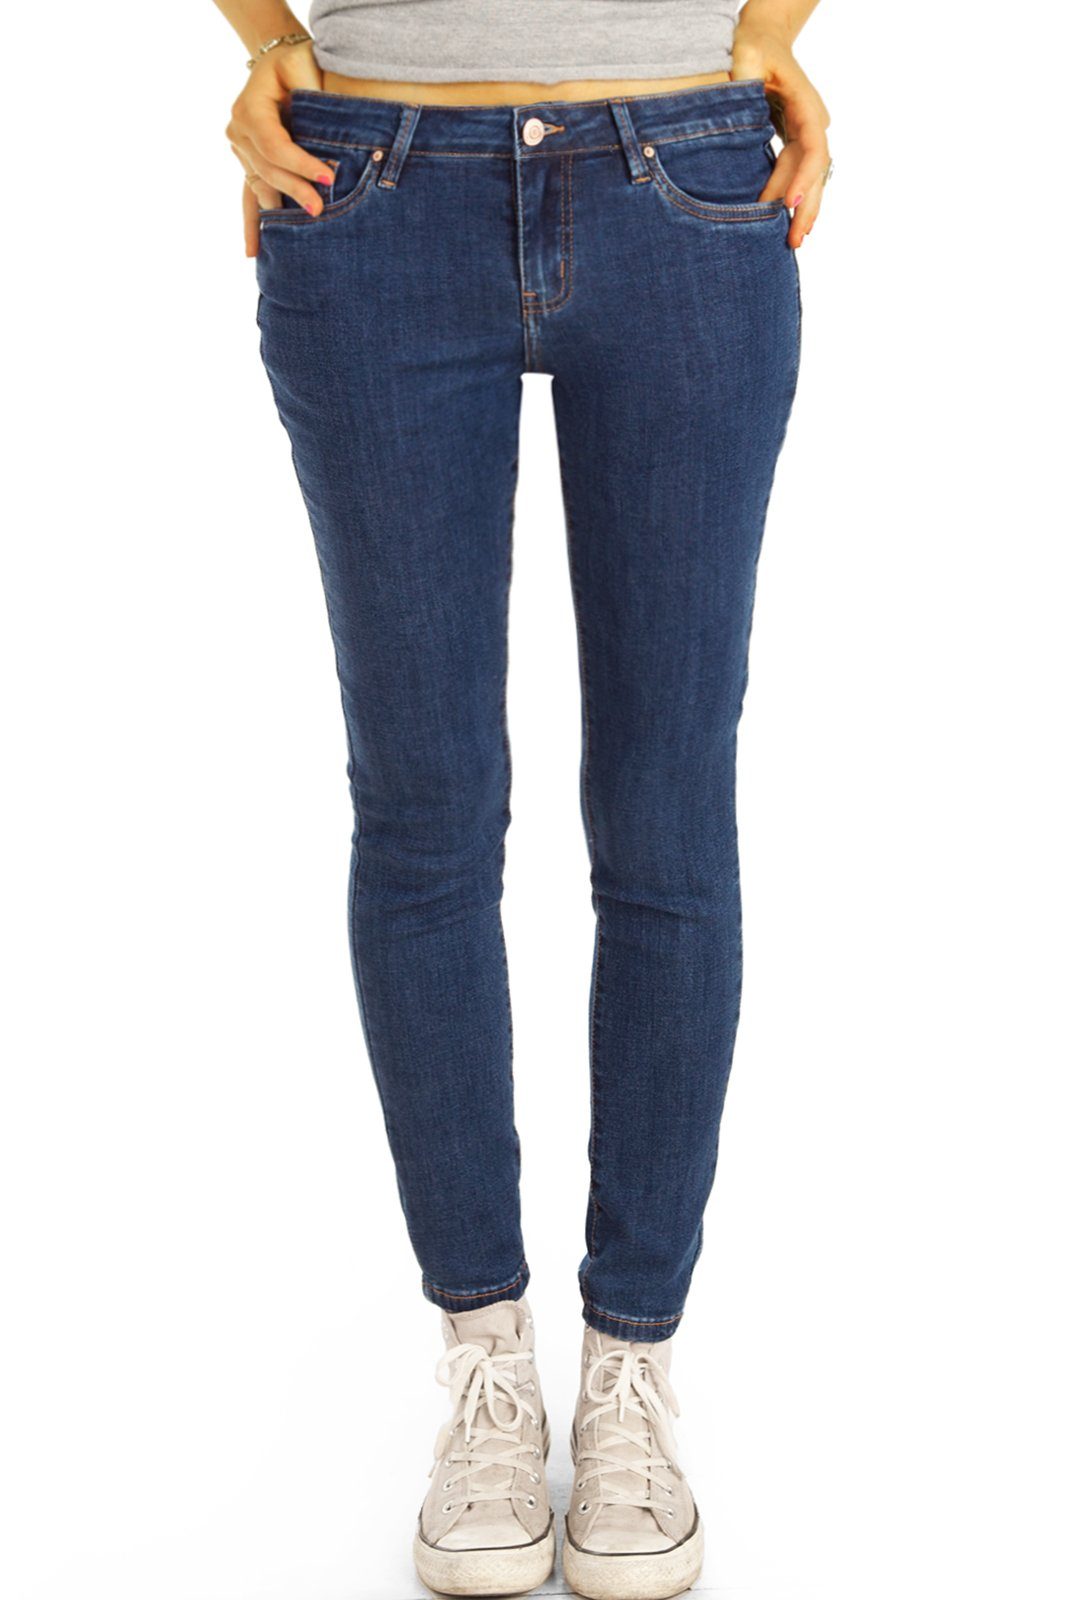 Stretch-Anteil, j27p-1 Damen- styled be Skinny Stretch dunkelblau - Hose 5-Pocket-Style - Low-rise-Jeans slim Hüftjeans mit Röhrenjeans